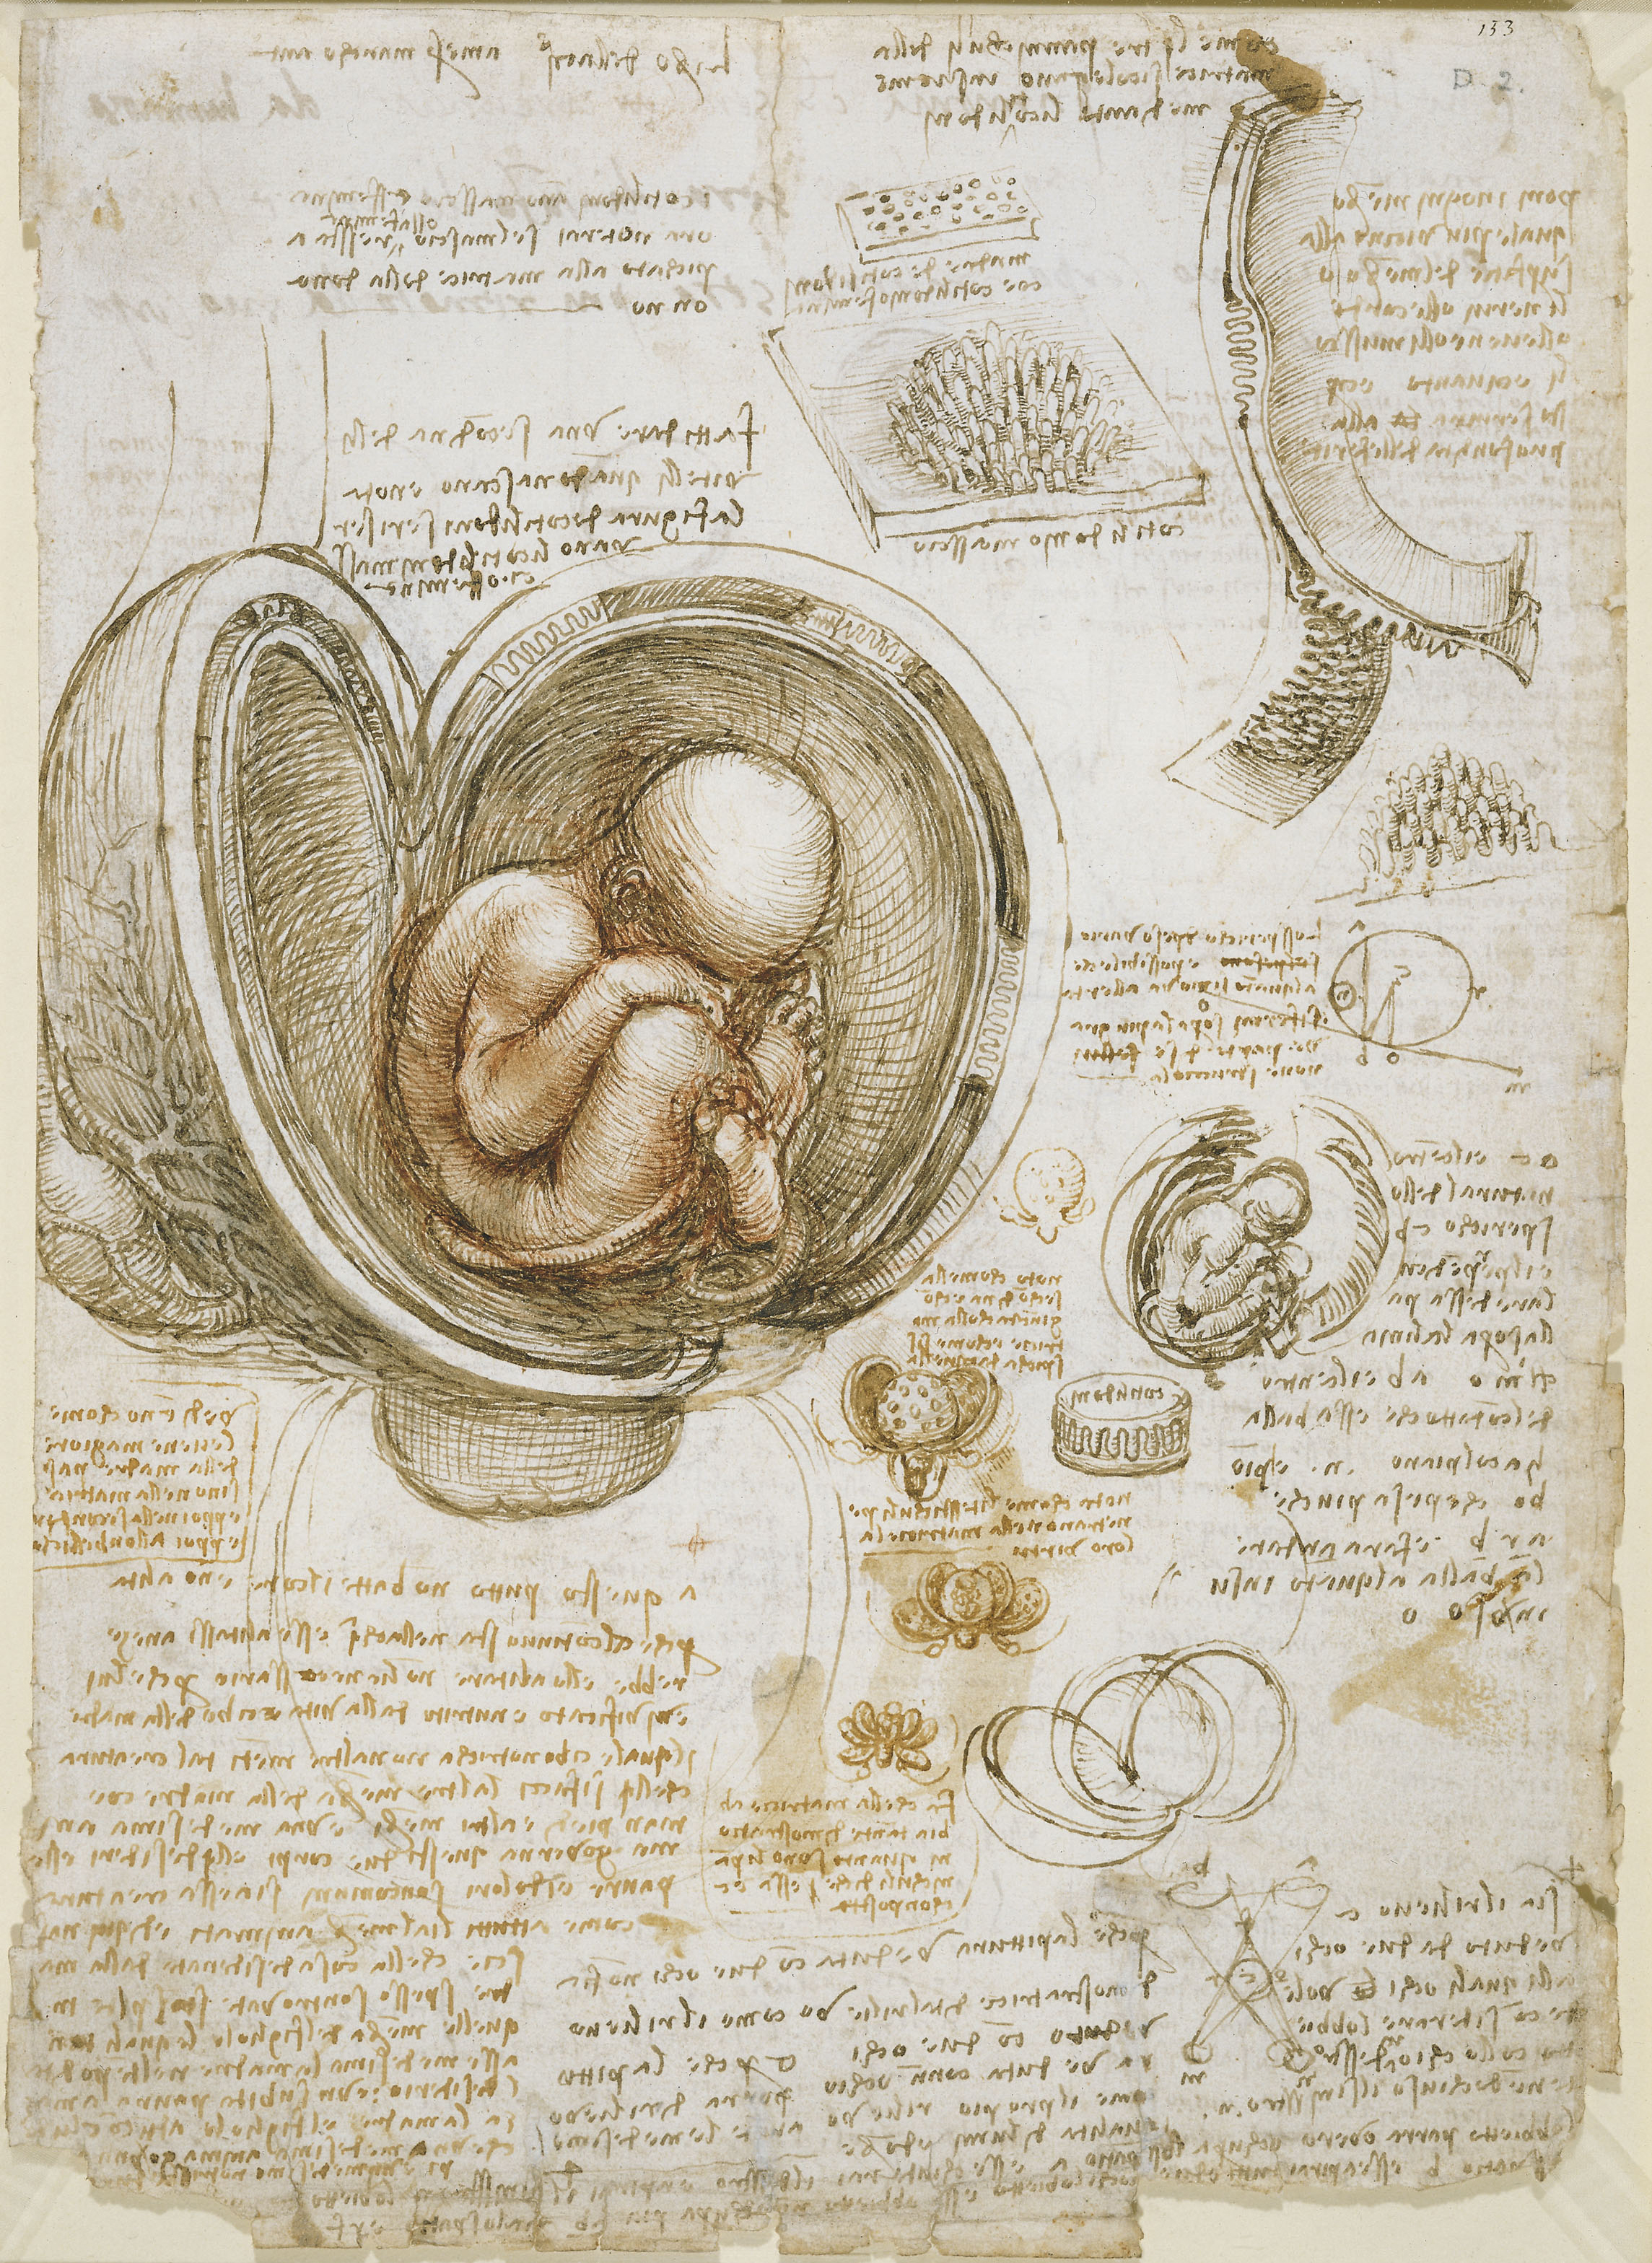 Leonardo da Vinci - Studies of the foetus in the womb